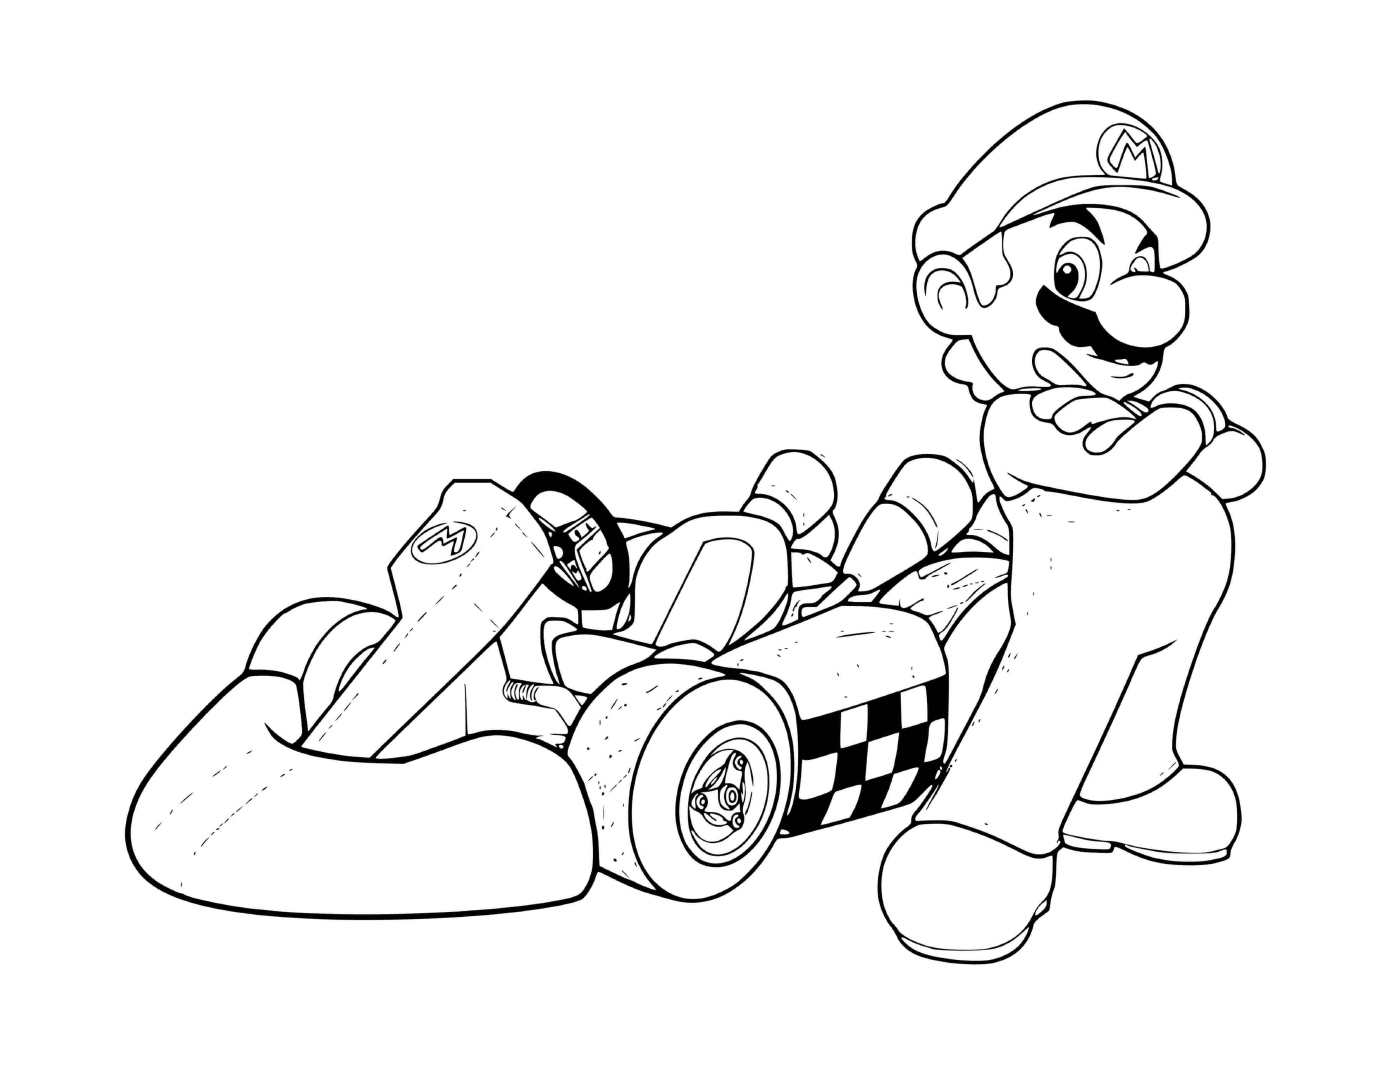  Ein Mario Kart-Charakter 